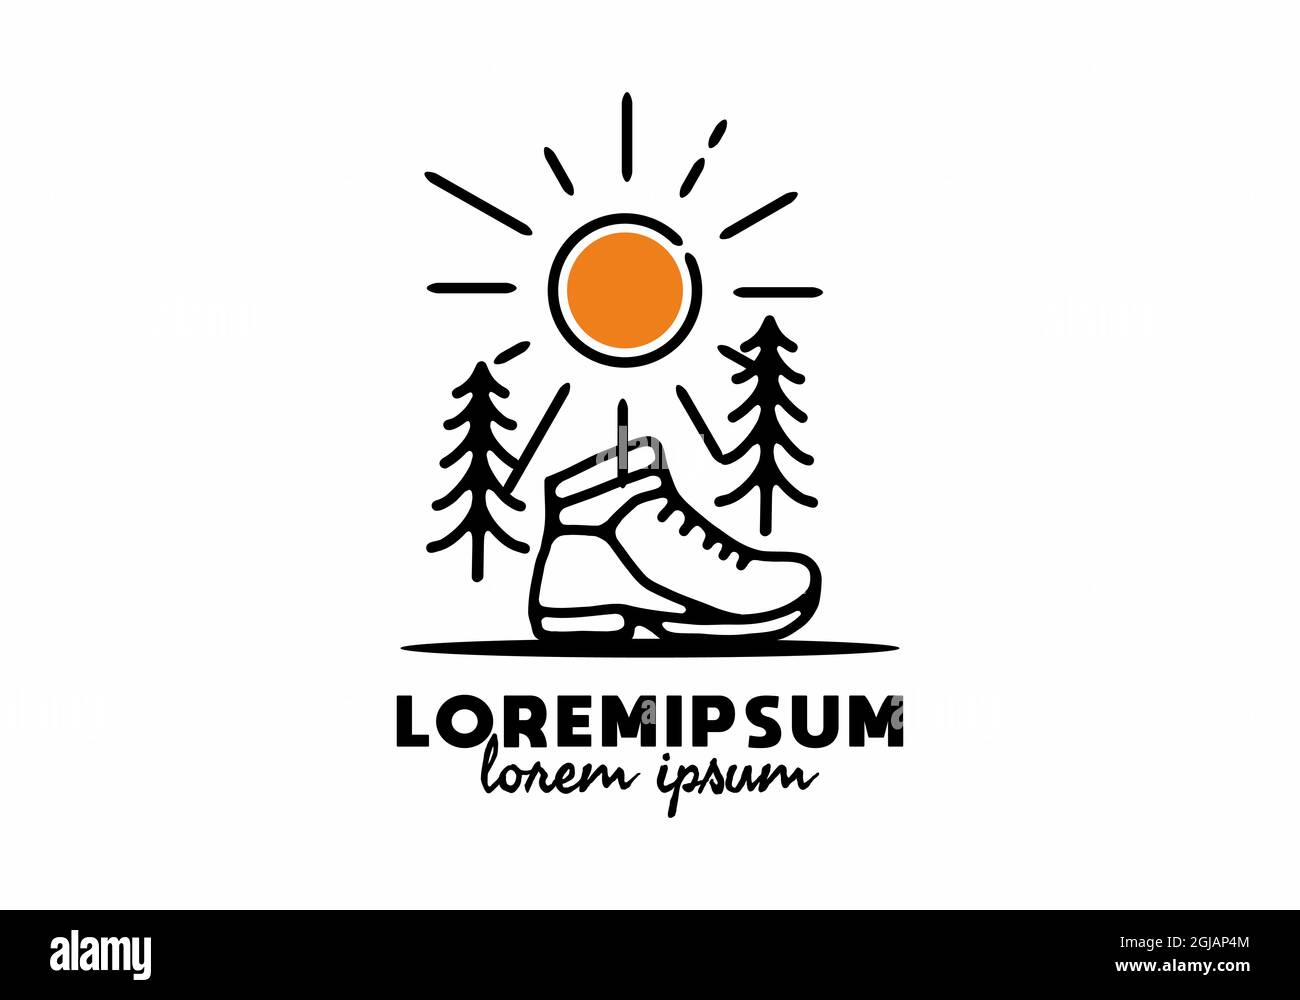 Mountain shoes line art with lorem ipsum text design Stock Vector